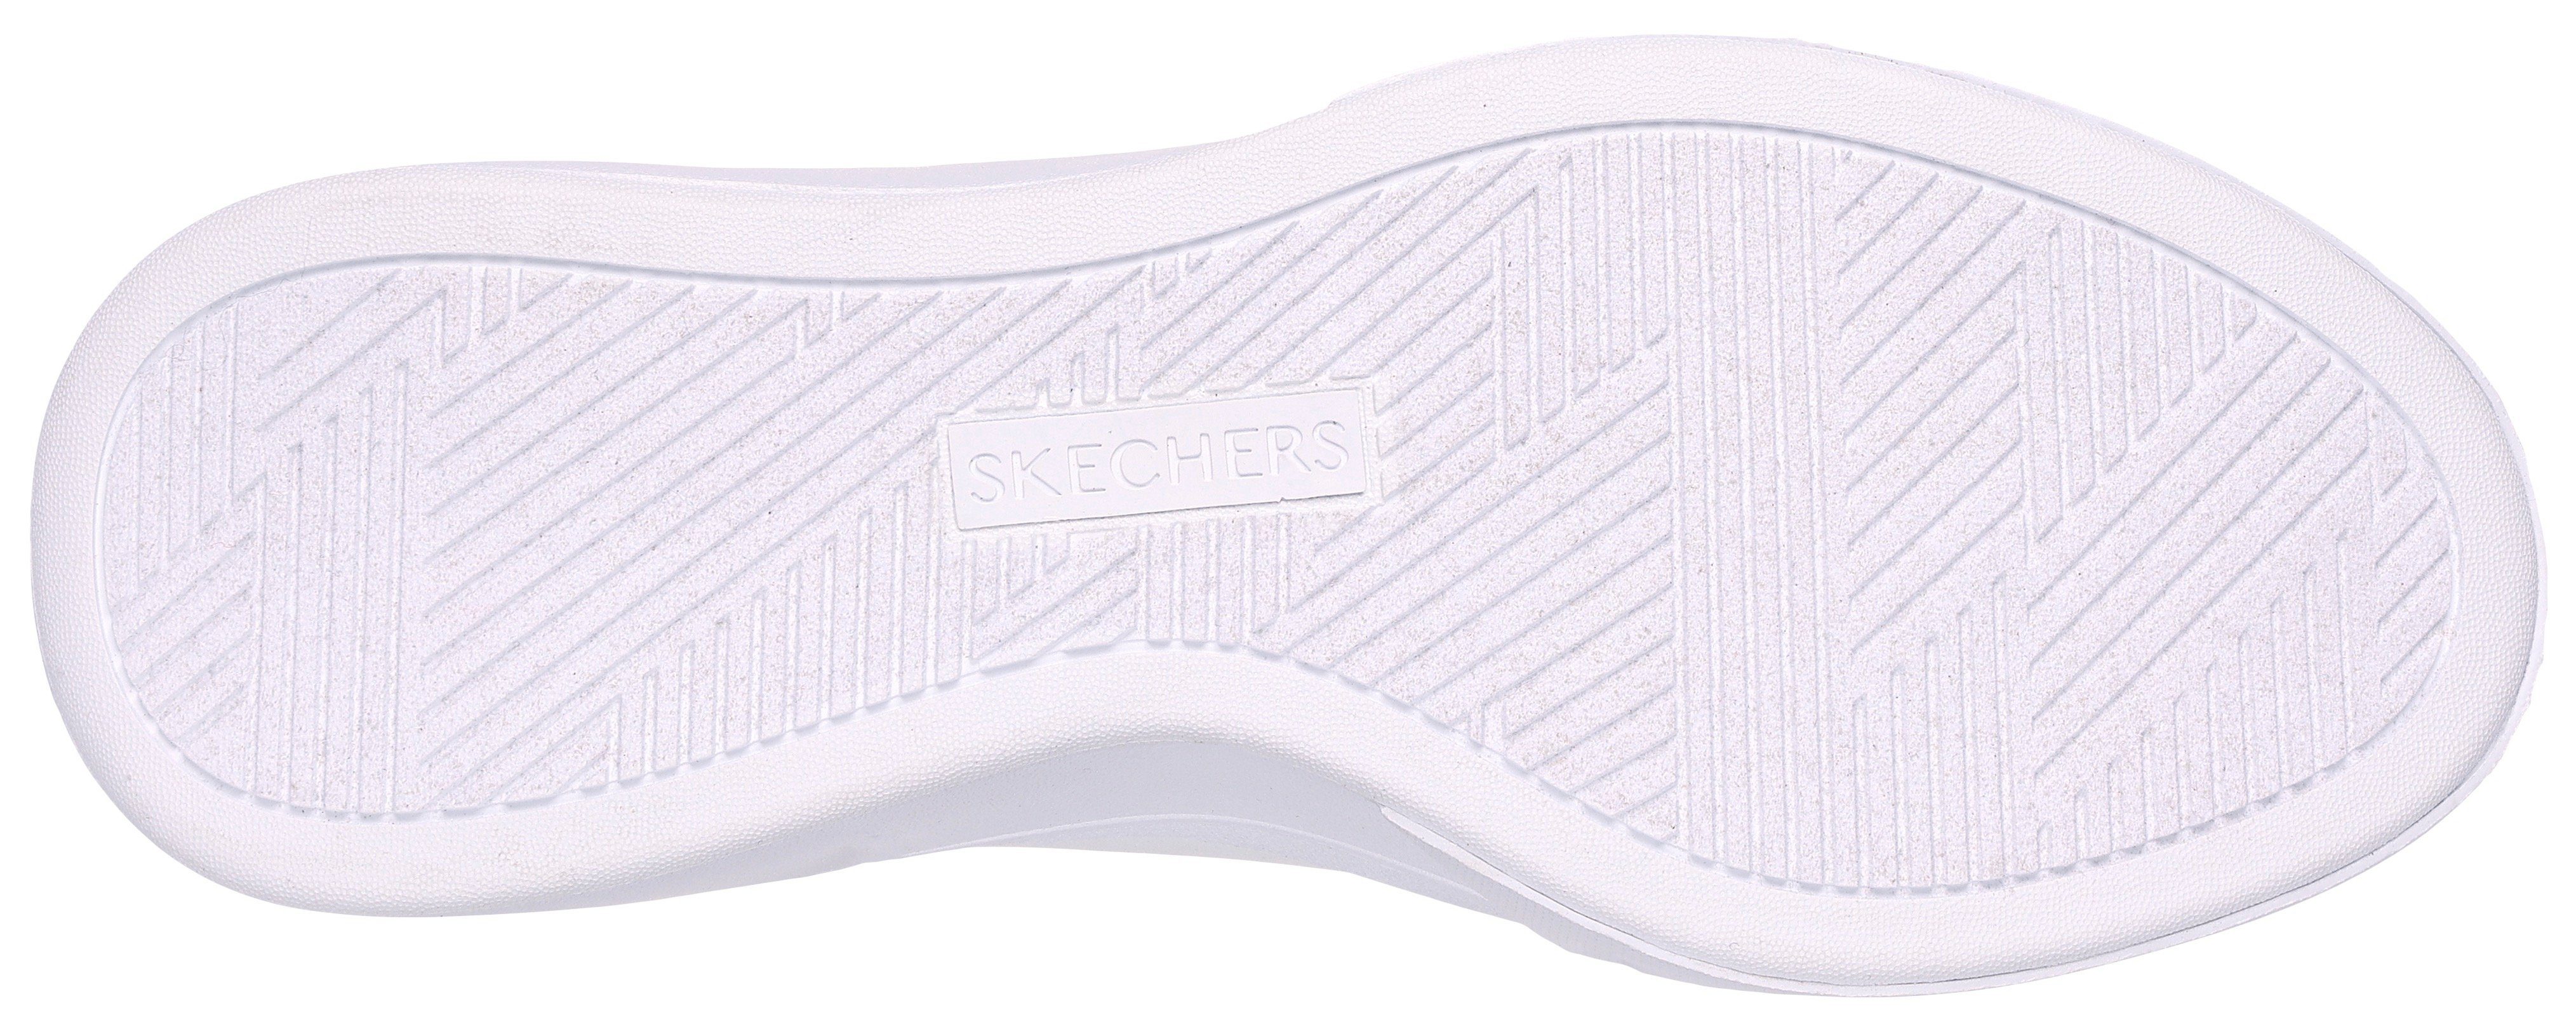 Skechers CORDOVA Kontrastbesatz mit CLASSIC- Sneaker (20203204) white/black